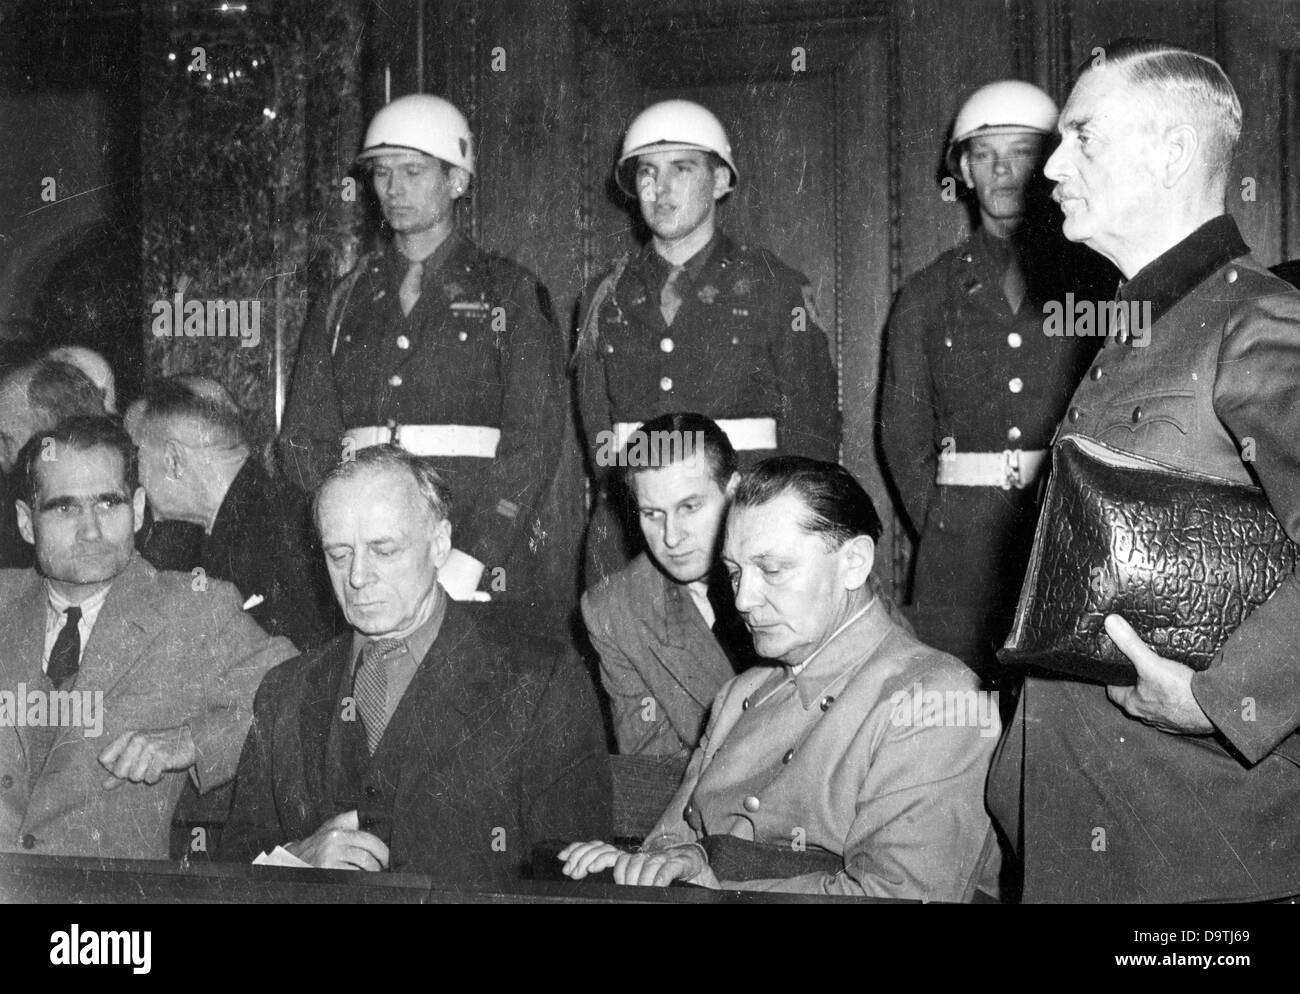 Principaux accusés au procès de Nuremberg (front de gauche) : Rudolf Hess, Joachim von Ribbentrop, Hermann Göring, Wilhelm Keitel. Photo : Yevgeny Khaldei Banque D'Images